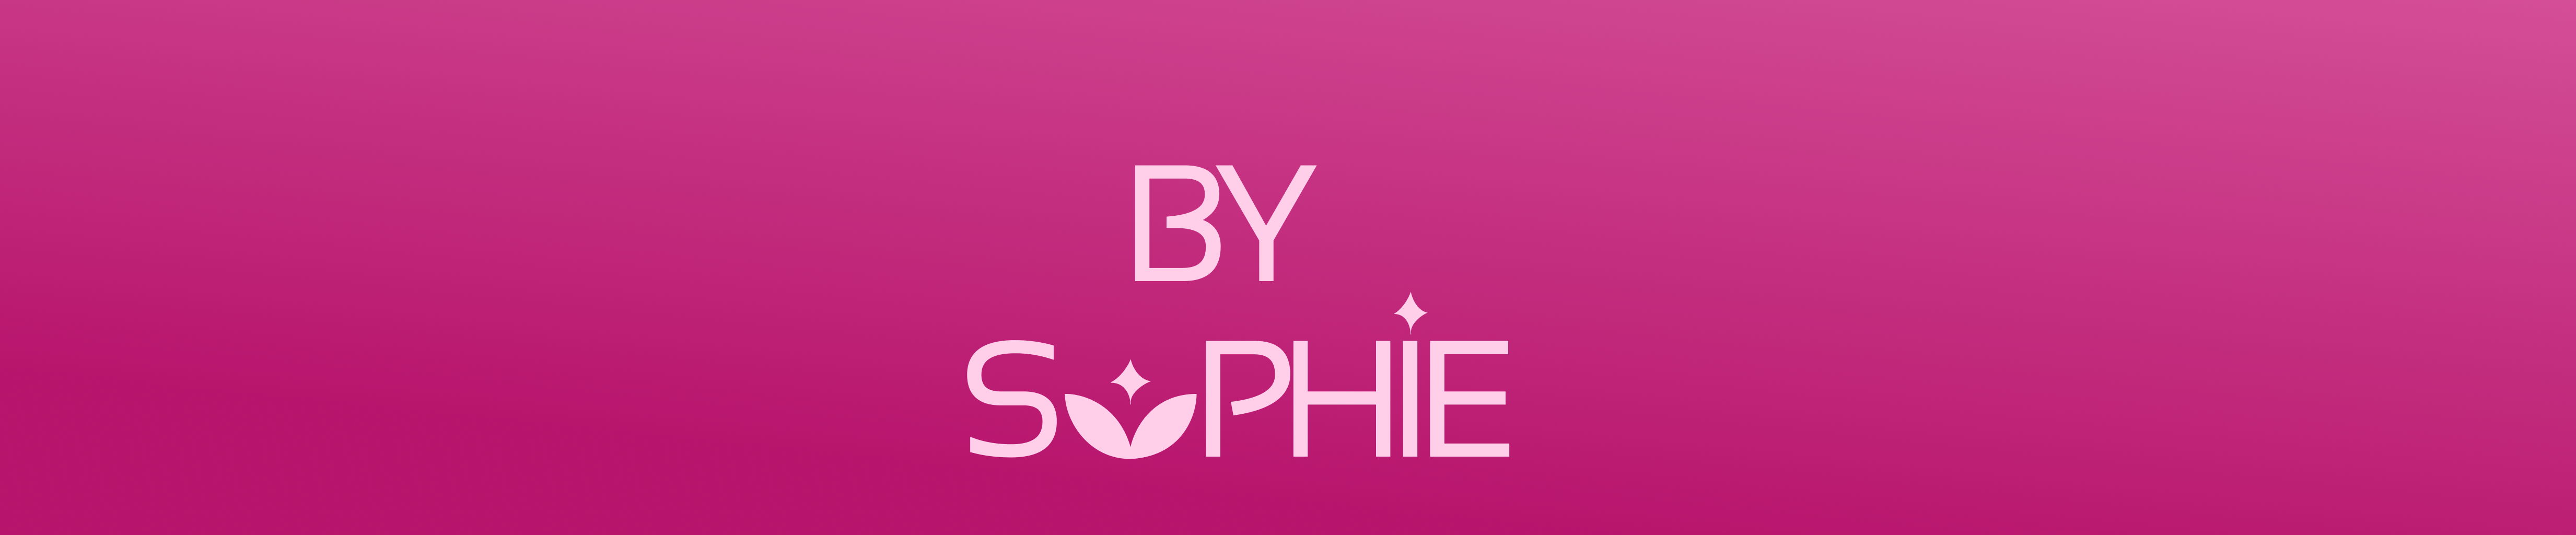 Banner de perfil de Sophia Dolianovska